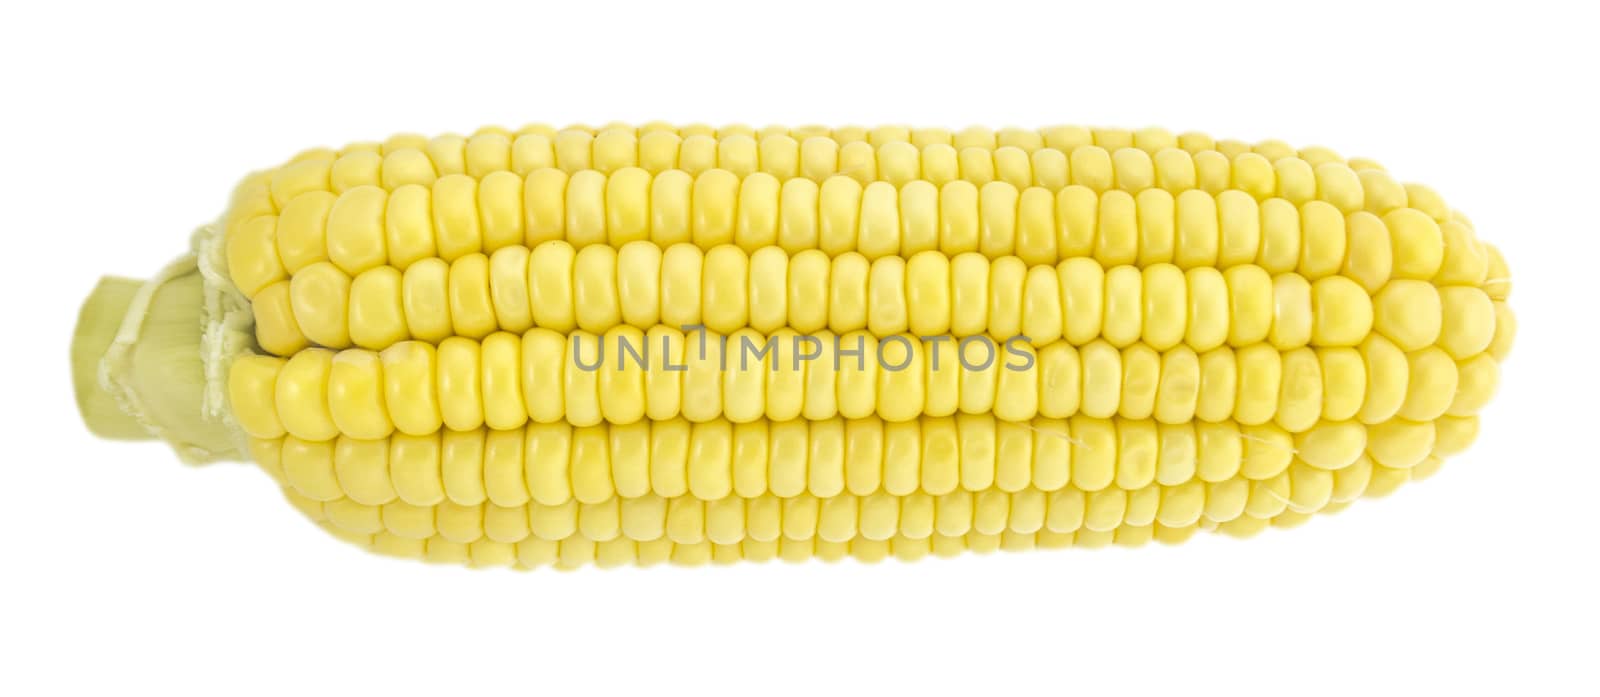 Corn by designsstock